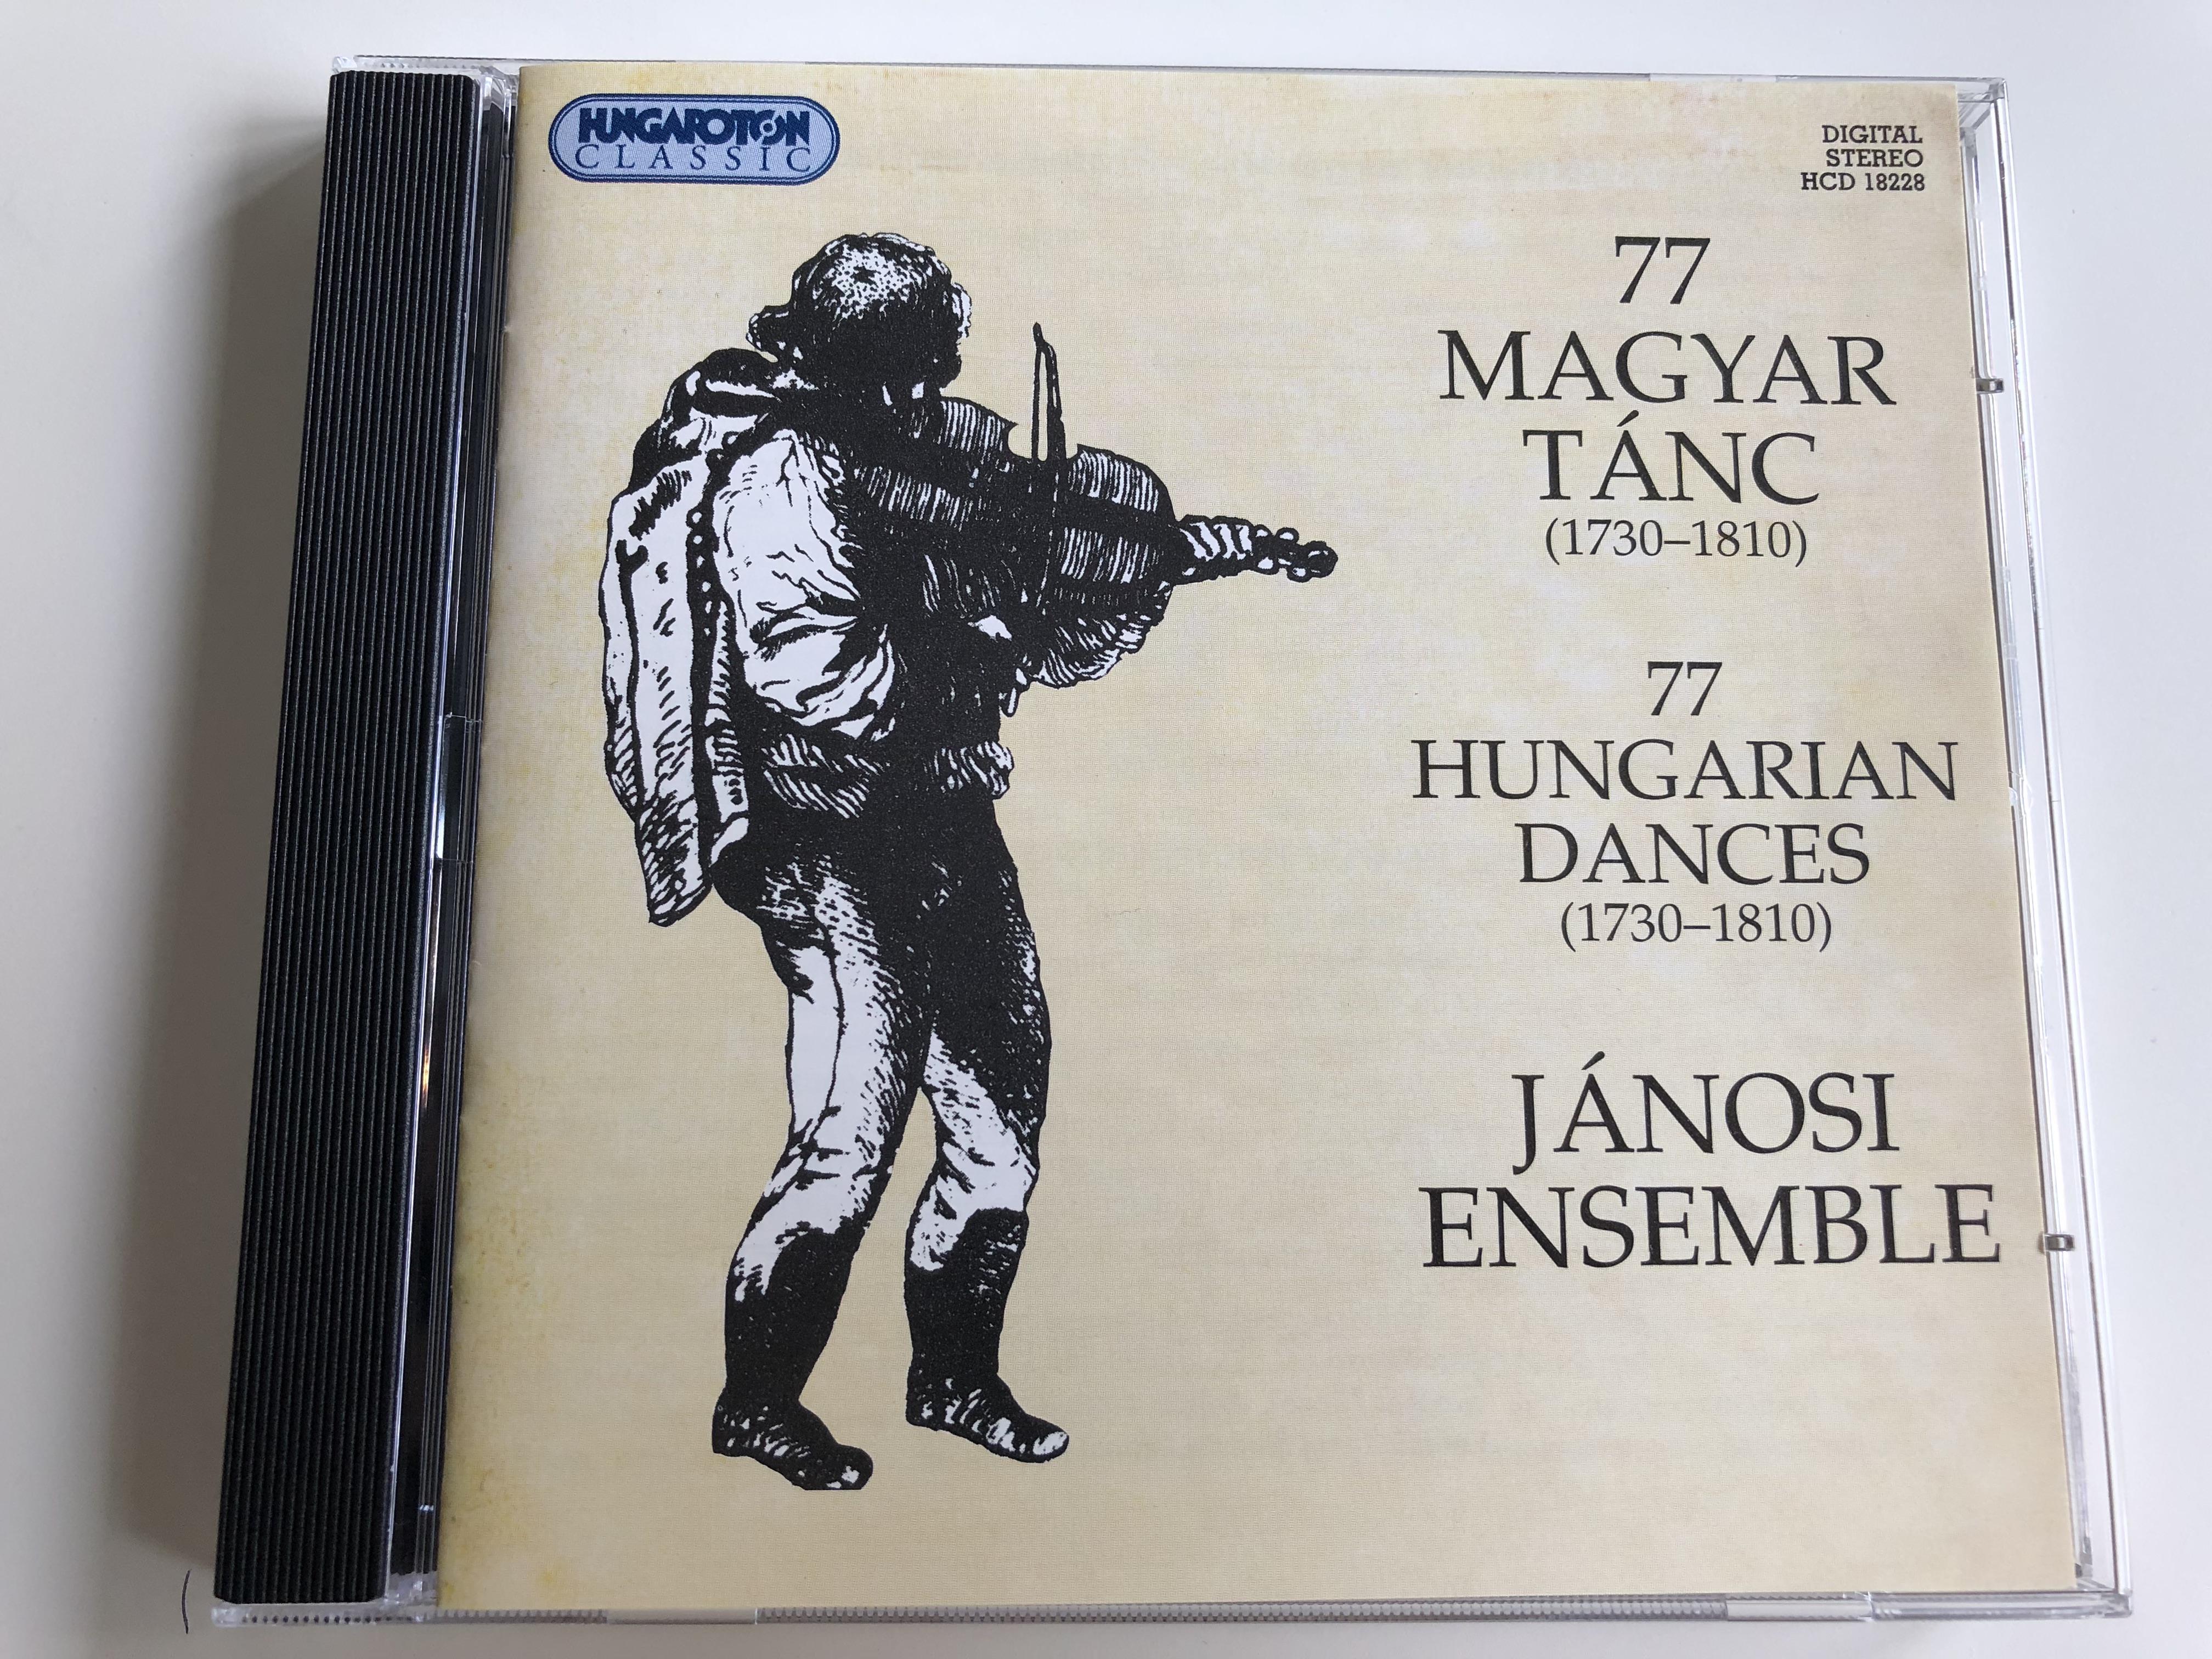 77-magyar-t-nc-1730-1810-77-hungarian-dances-j-nosi-ensemble-andr-s-j-nosi-andr-s-turi-j-nos-s-nta-hungaroton-classic-hcd-18228-audio-cd-1997-1-.jpg